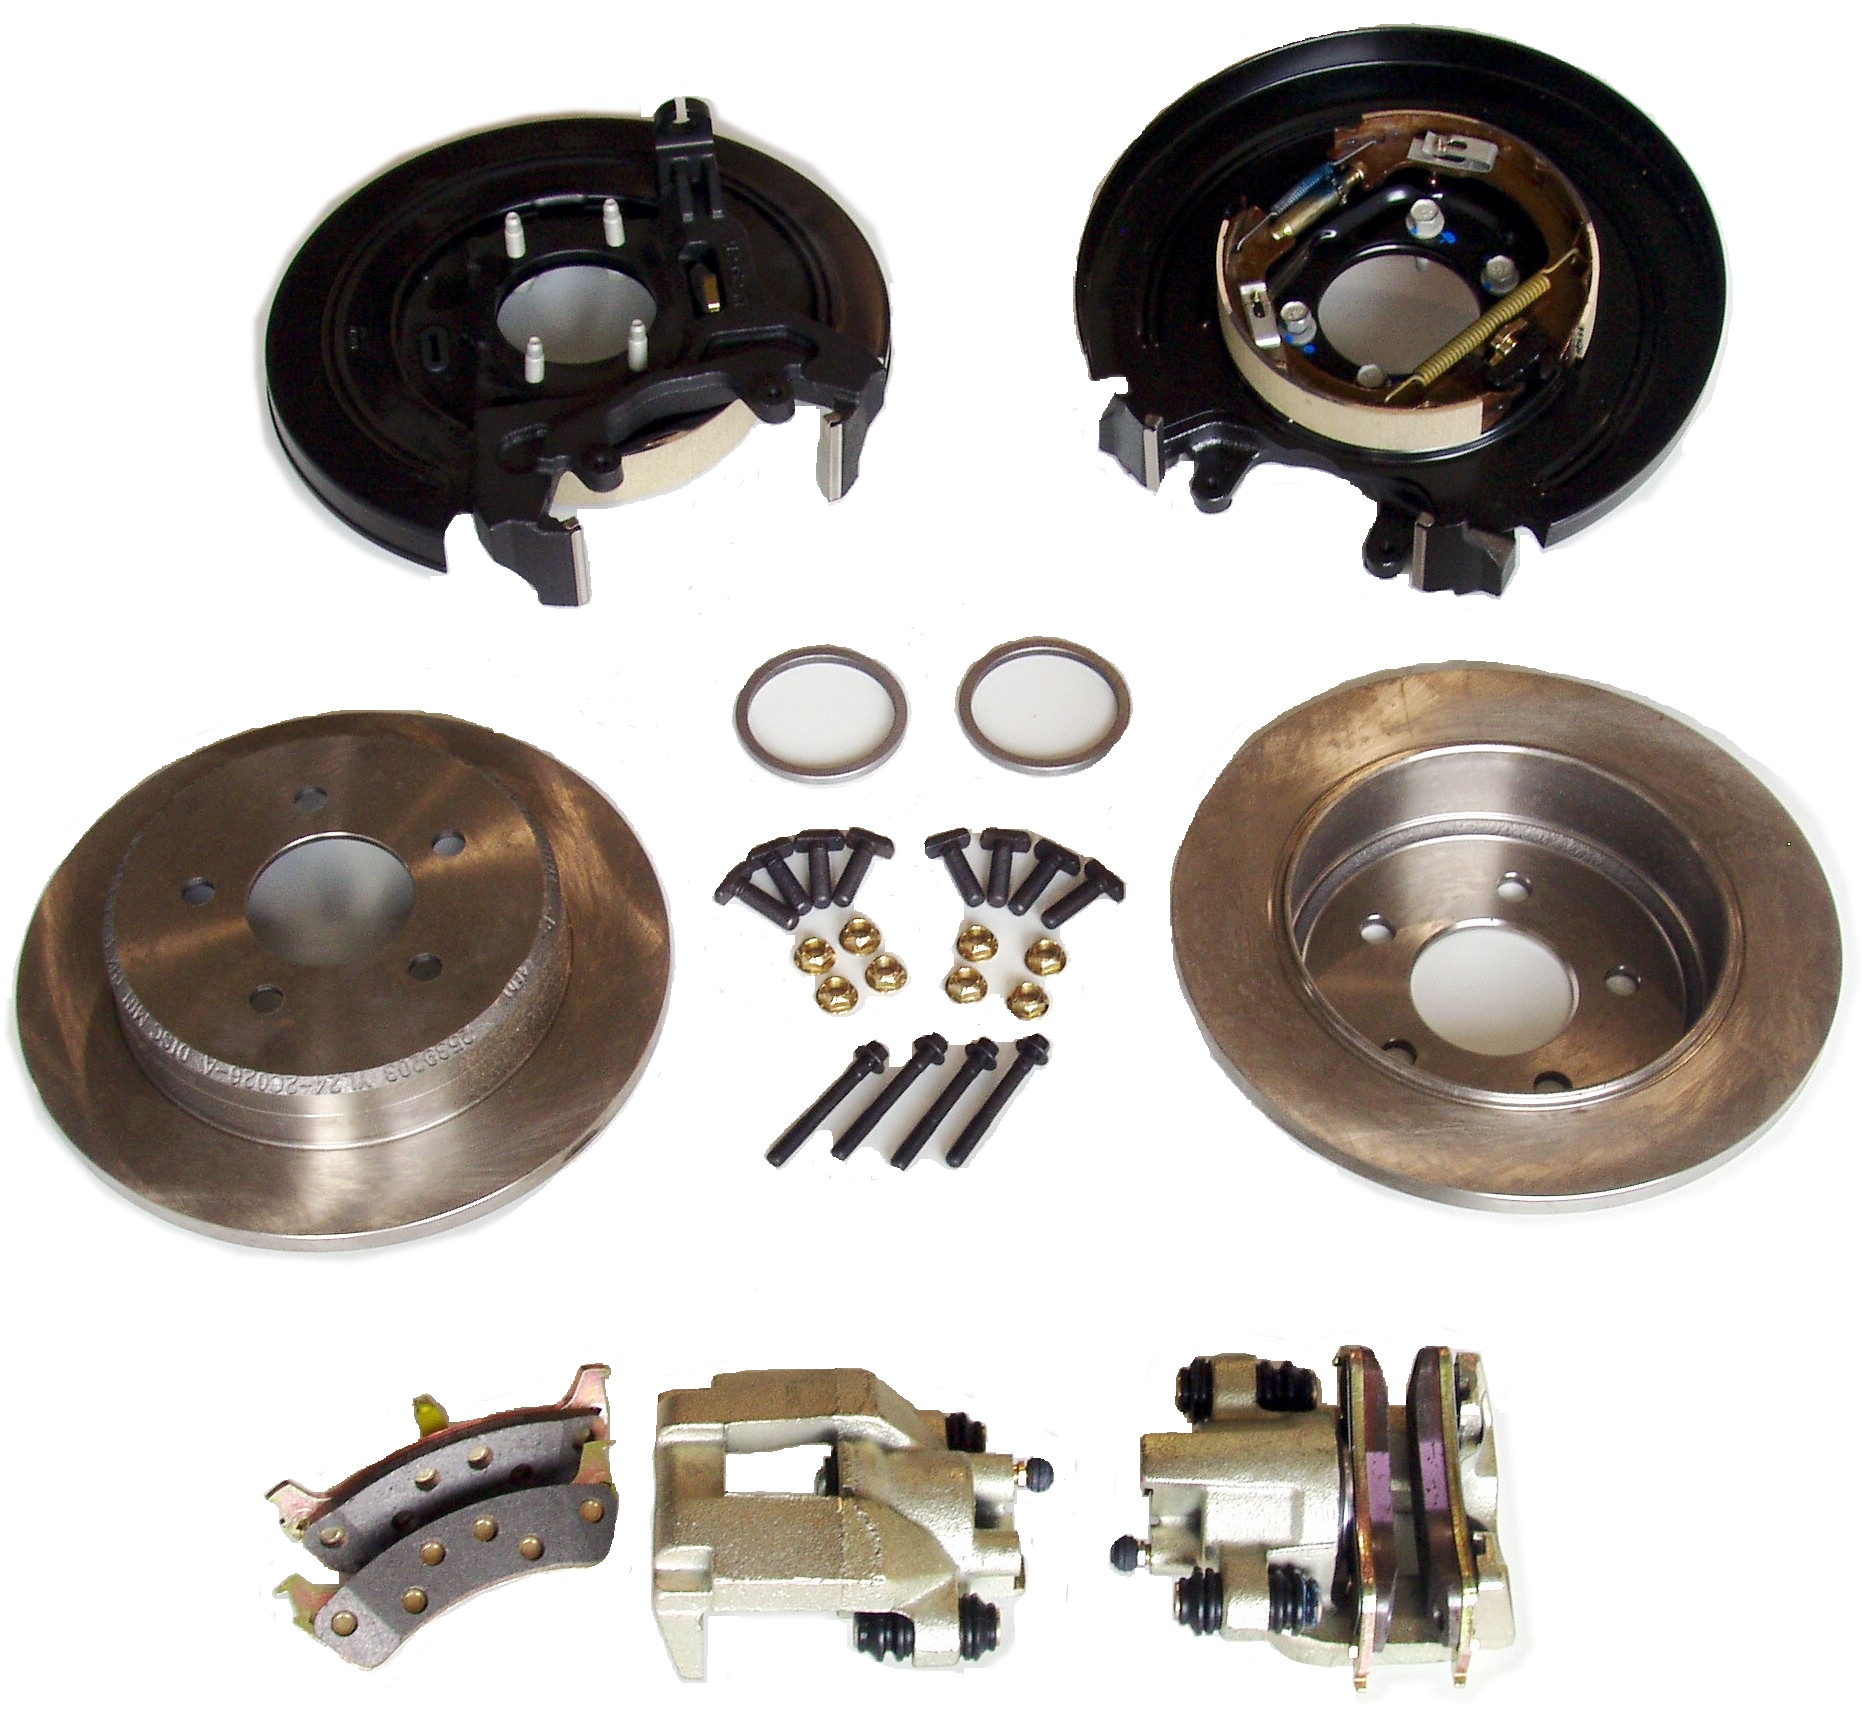 9 Inch ford rear disc brake kit